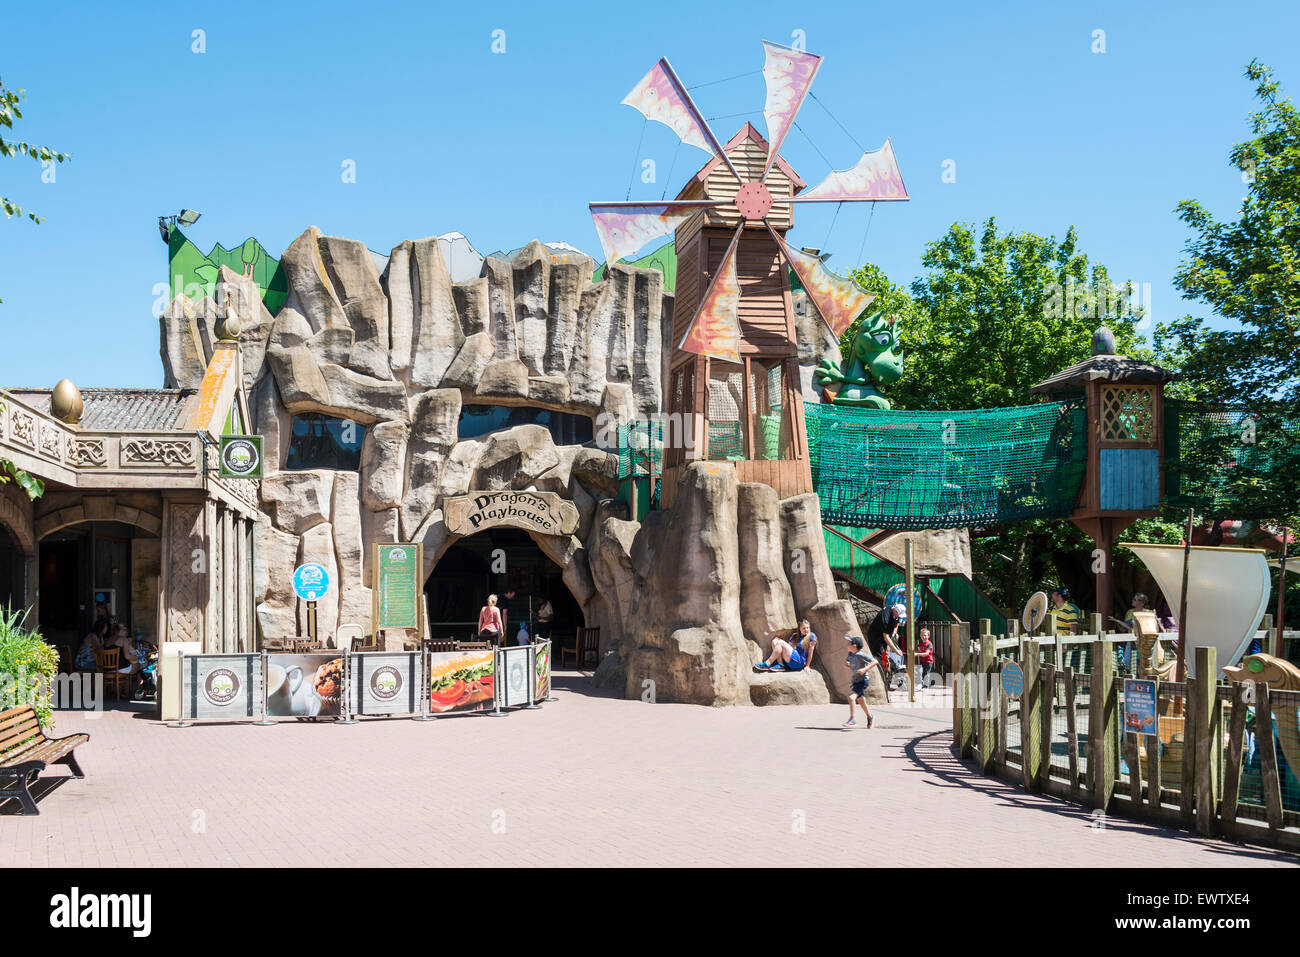 Dragon's Playhouse, Chessington World of Adventures Theme Park, Chessington, Surrey, England, United Kingdom Stock Photo